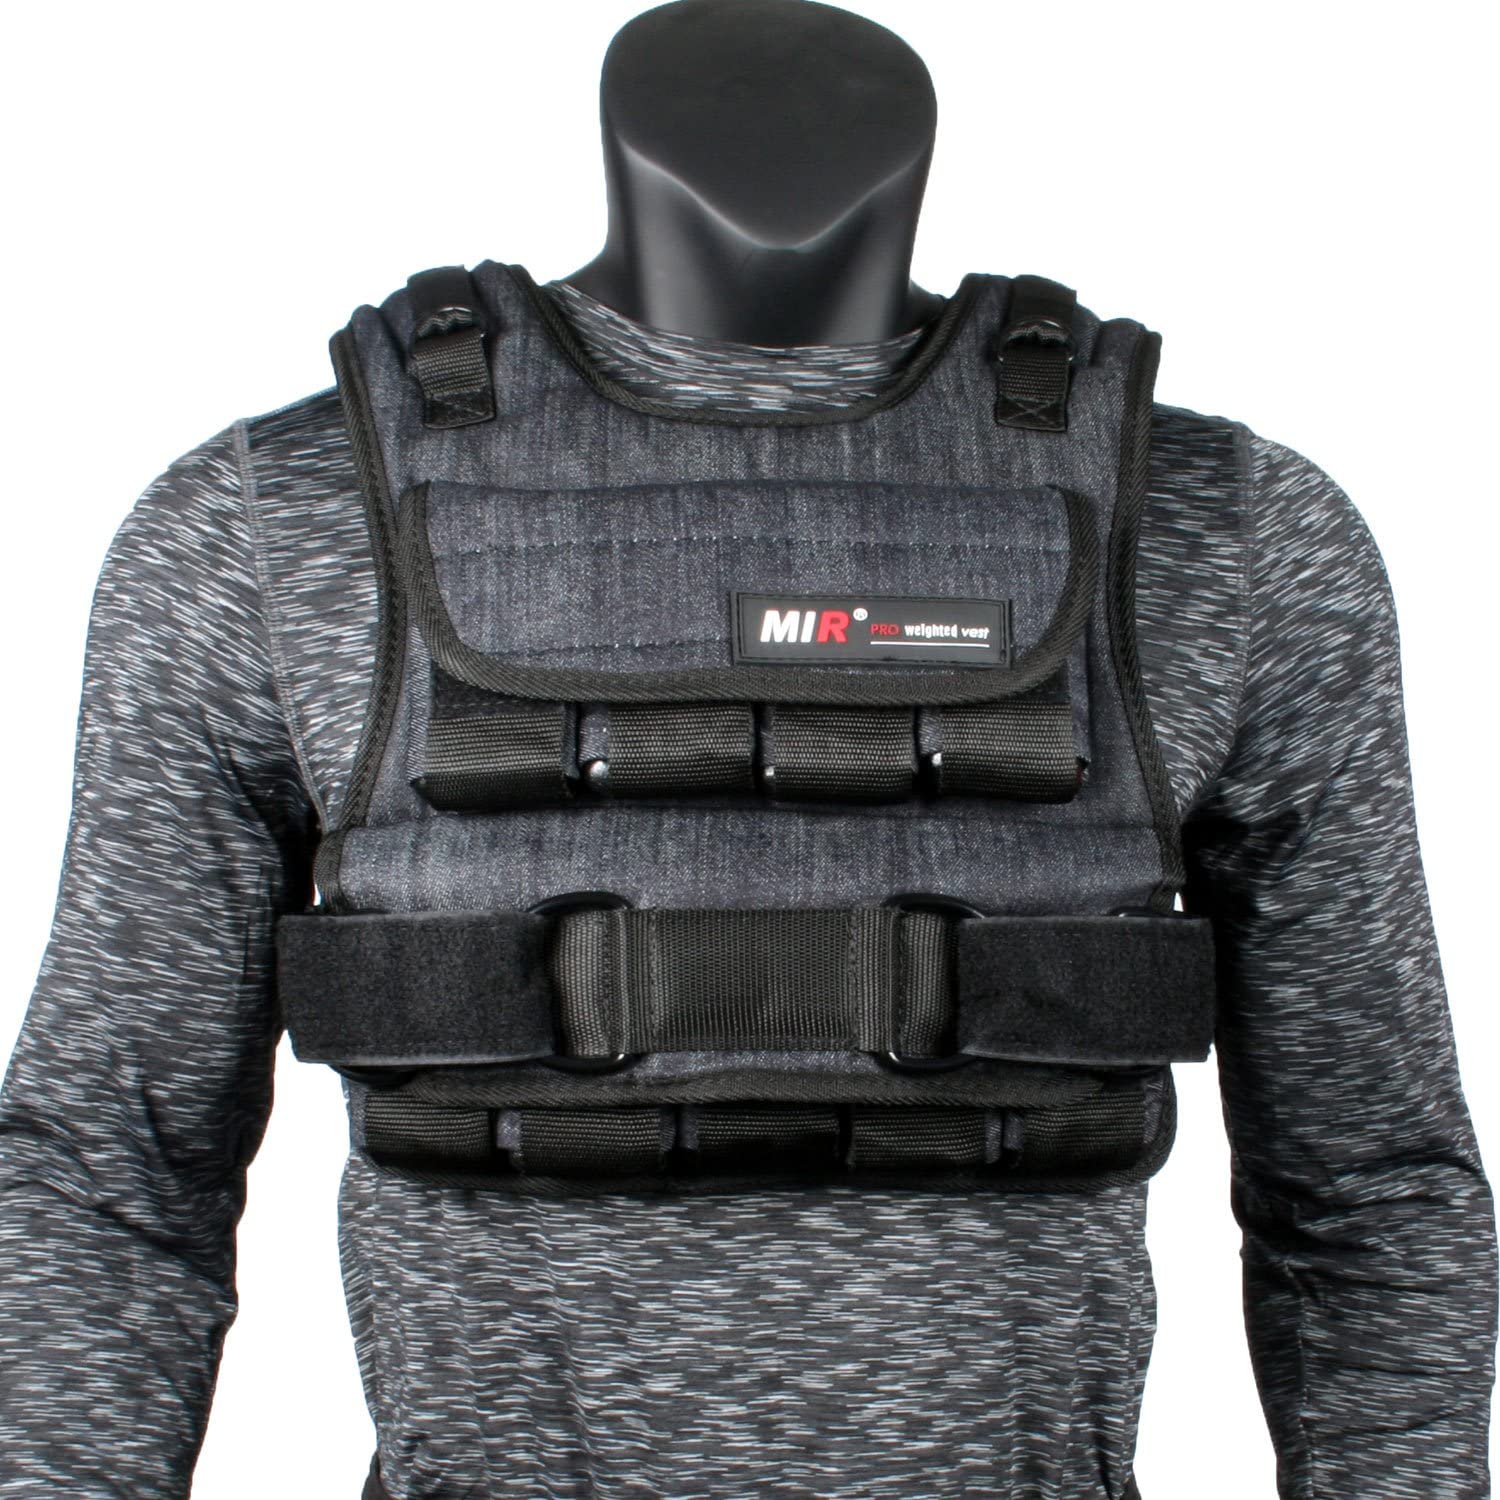 miR - 50LBS (AIR Flow) Unisex Adjustable Weighted Vest